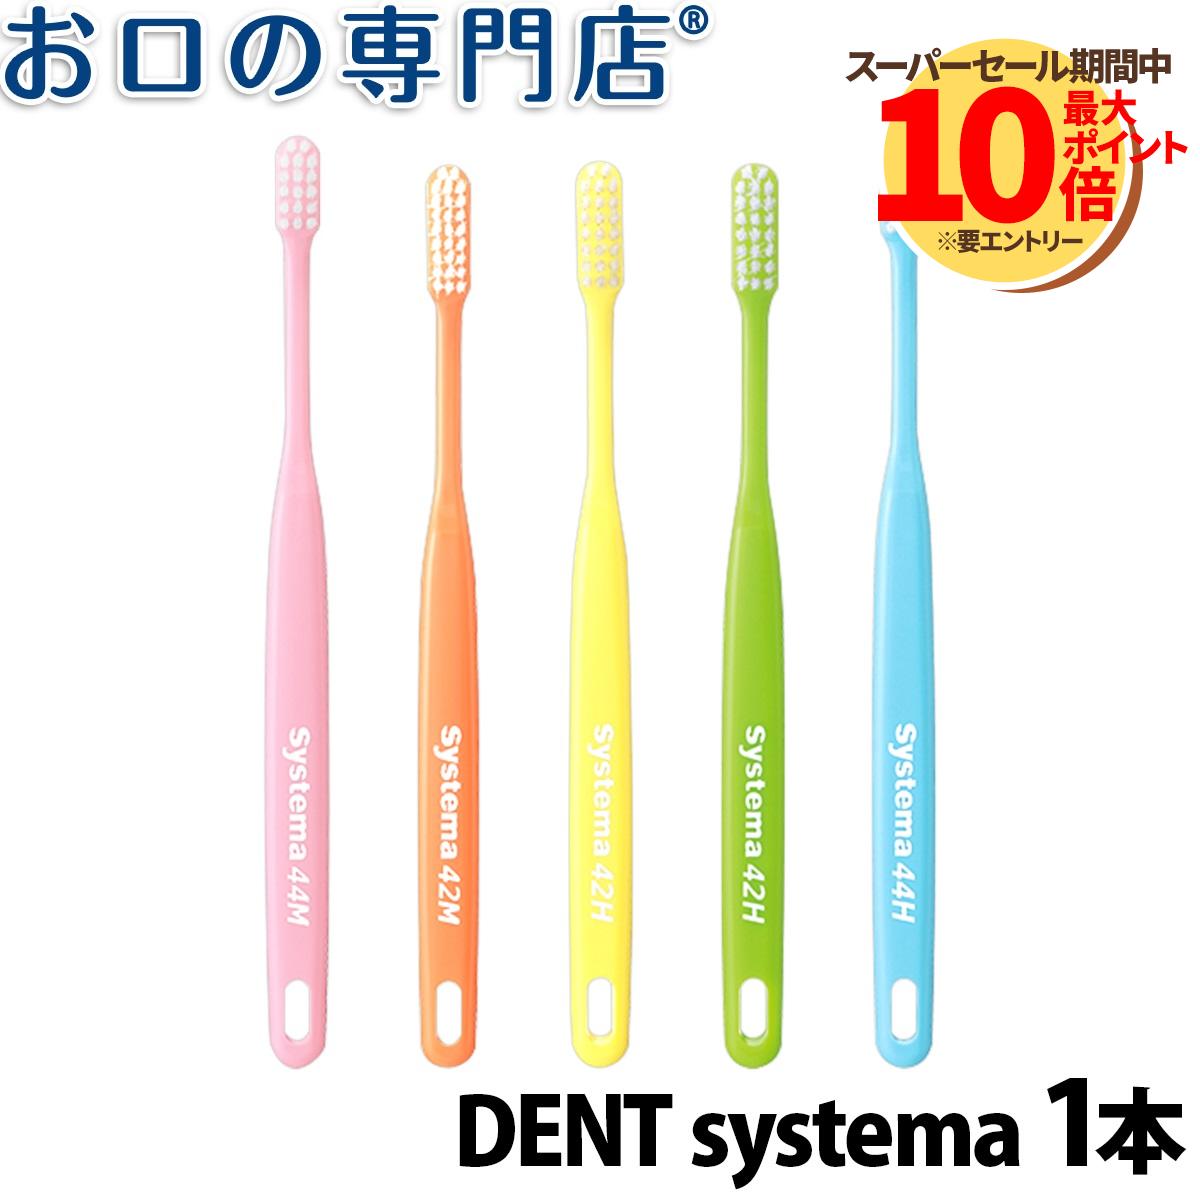 DENT. systema 歯ブラシ 1本